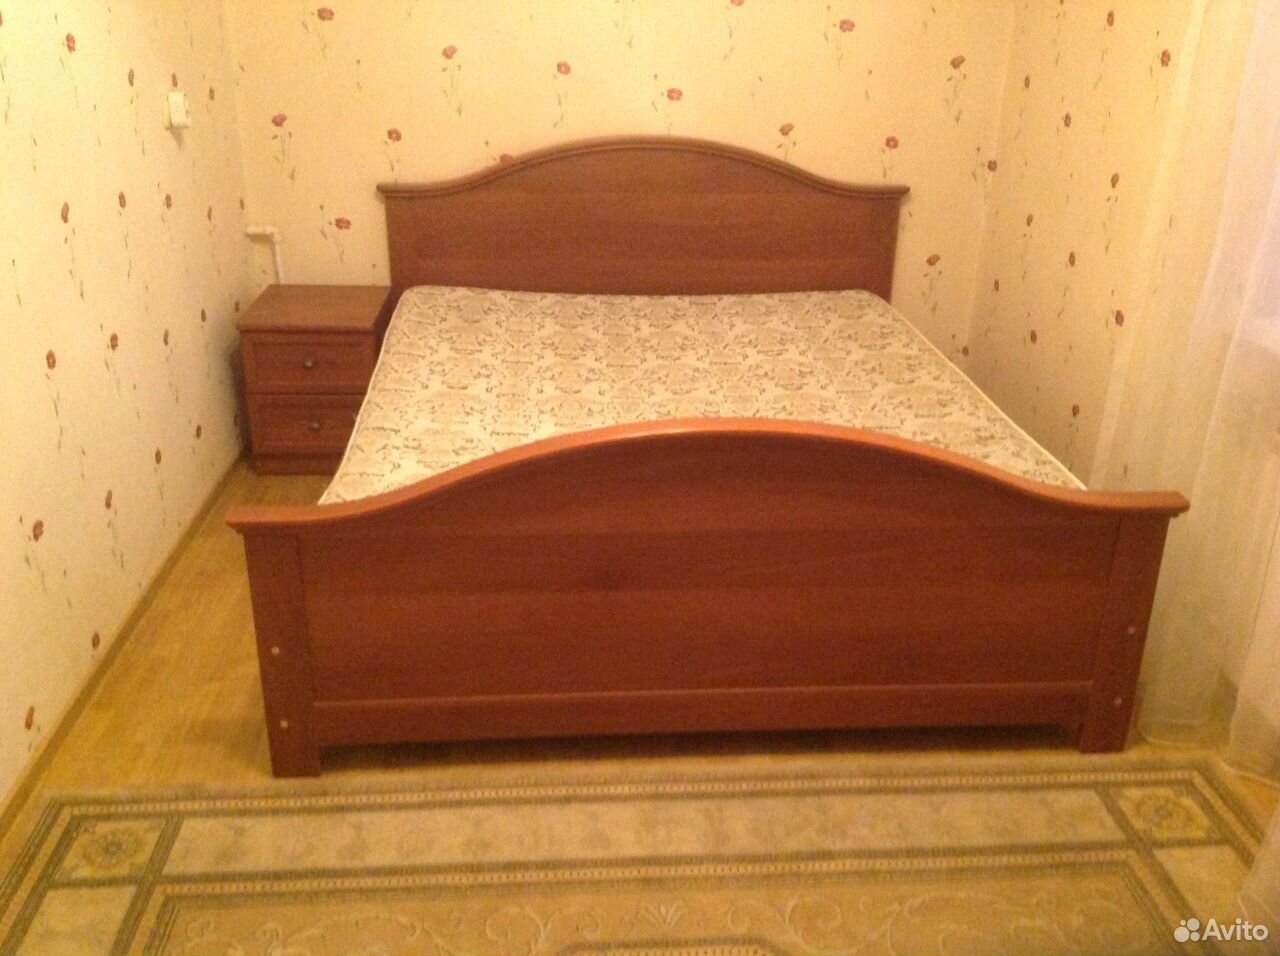 Бэушные кровати. Кровать 2х спальная Старая. БЭУШНАЯ кровать. 1 5 Спальная кровать старого образца.